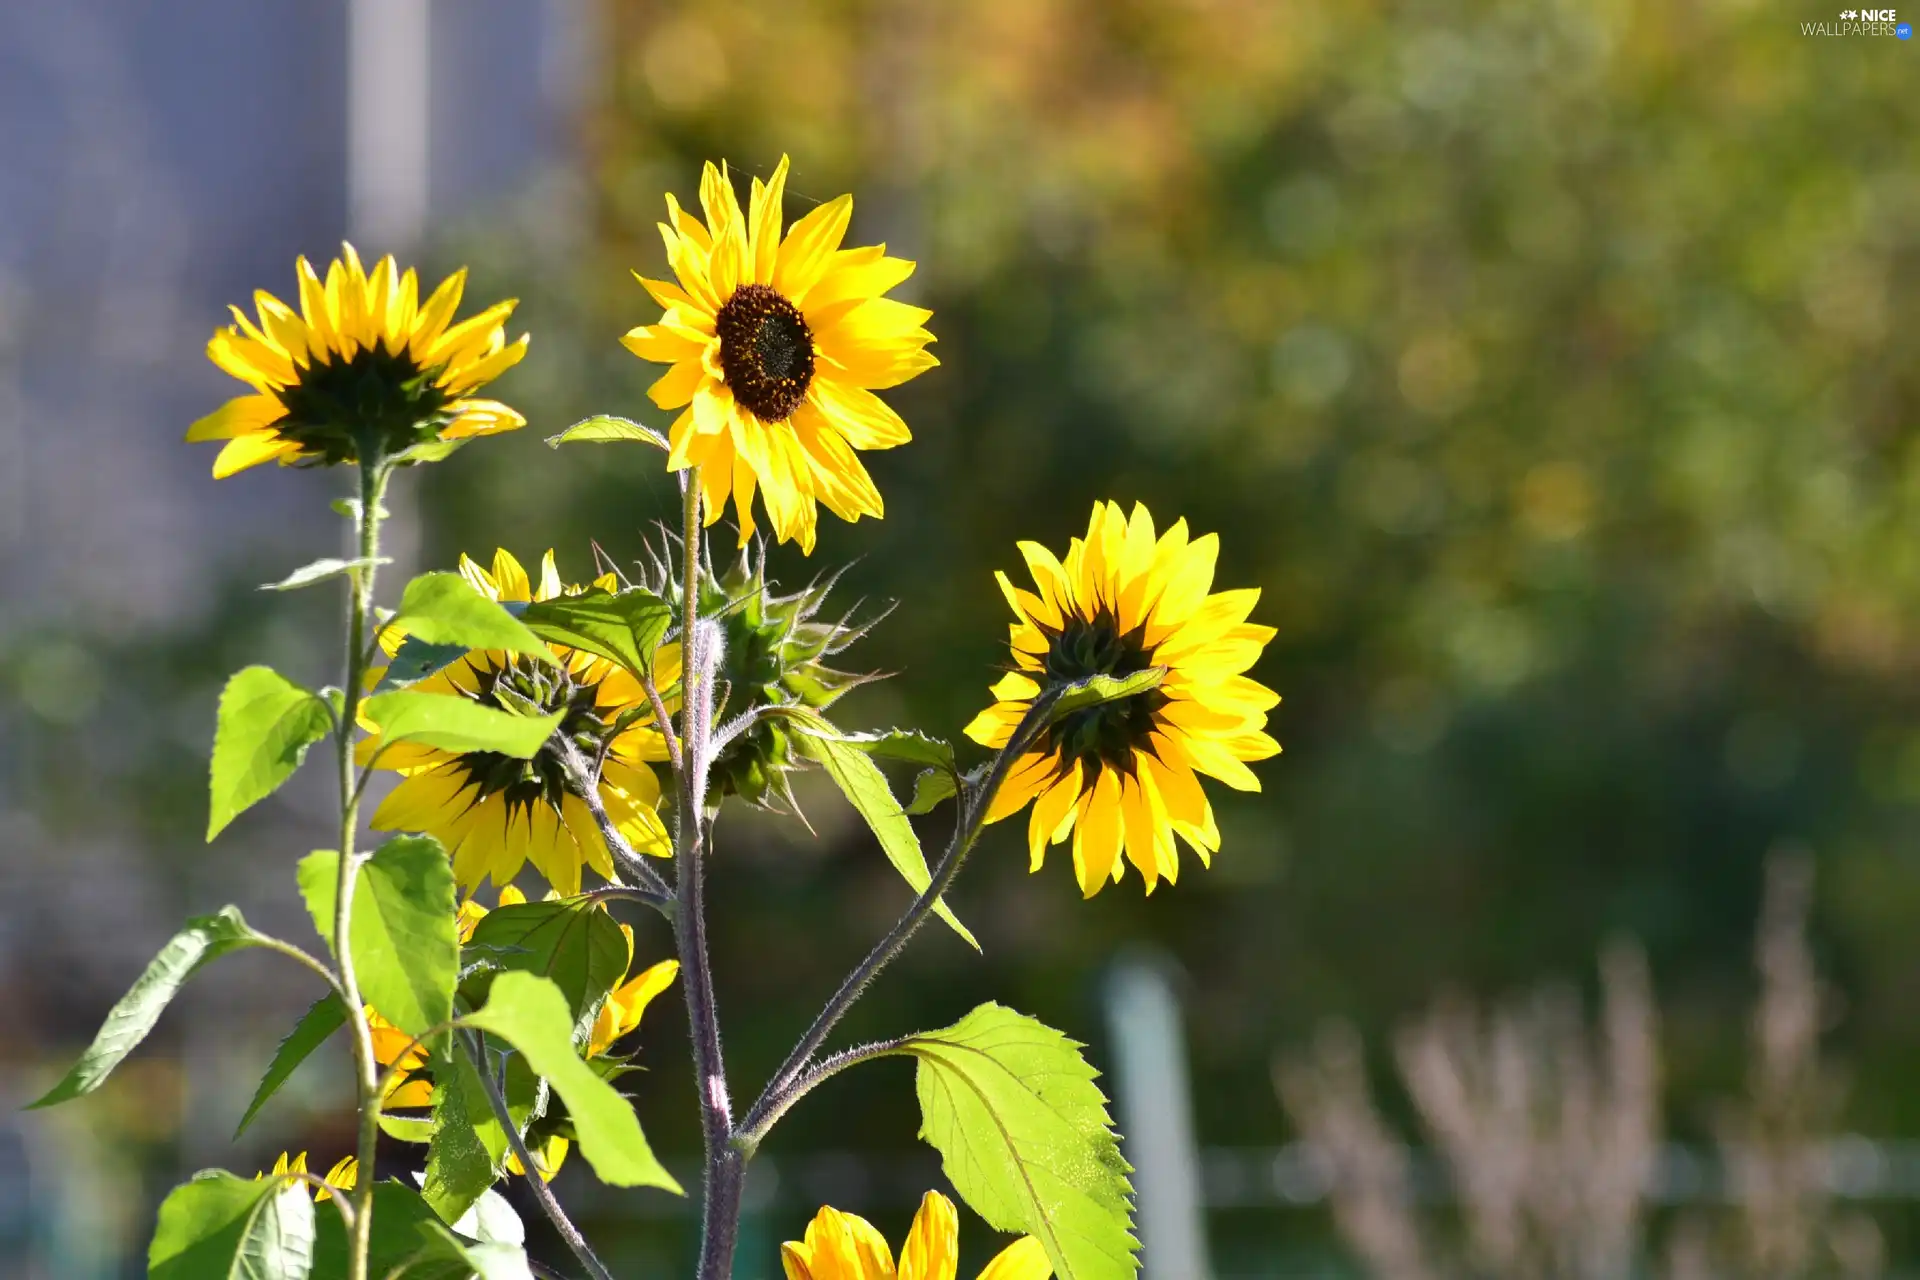 Nice sunflowers, ornamental